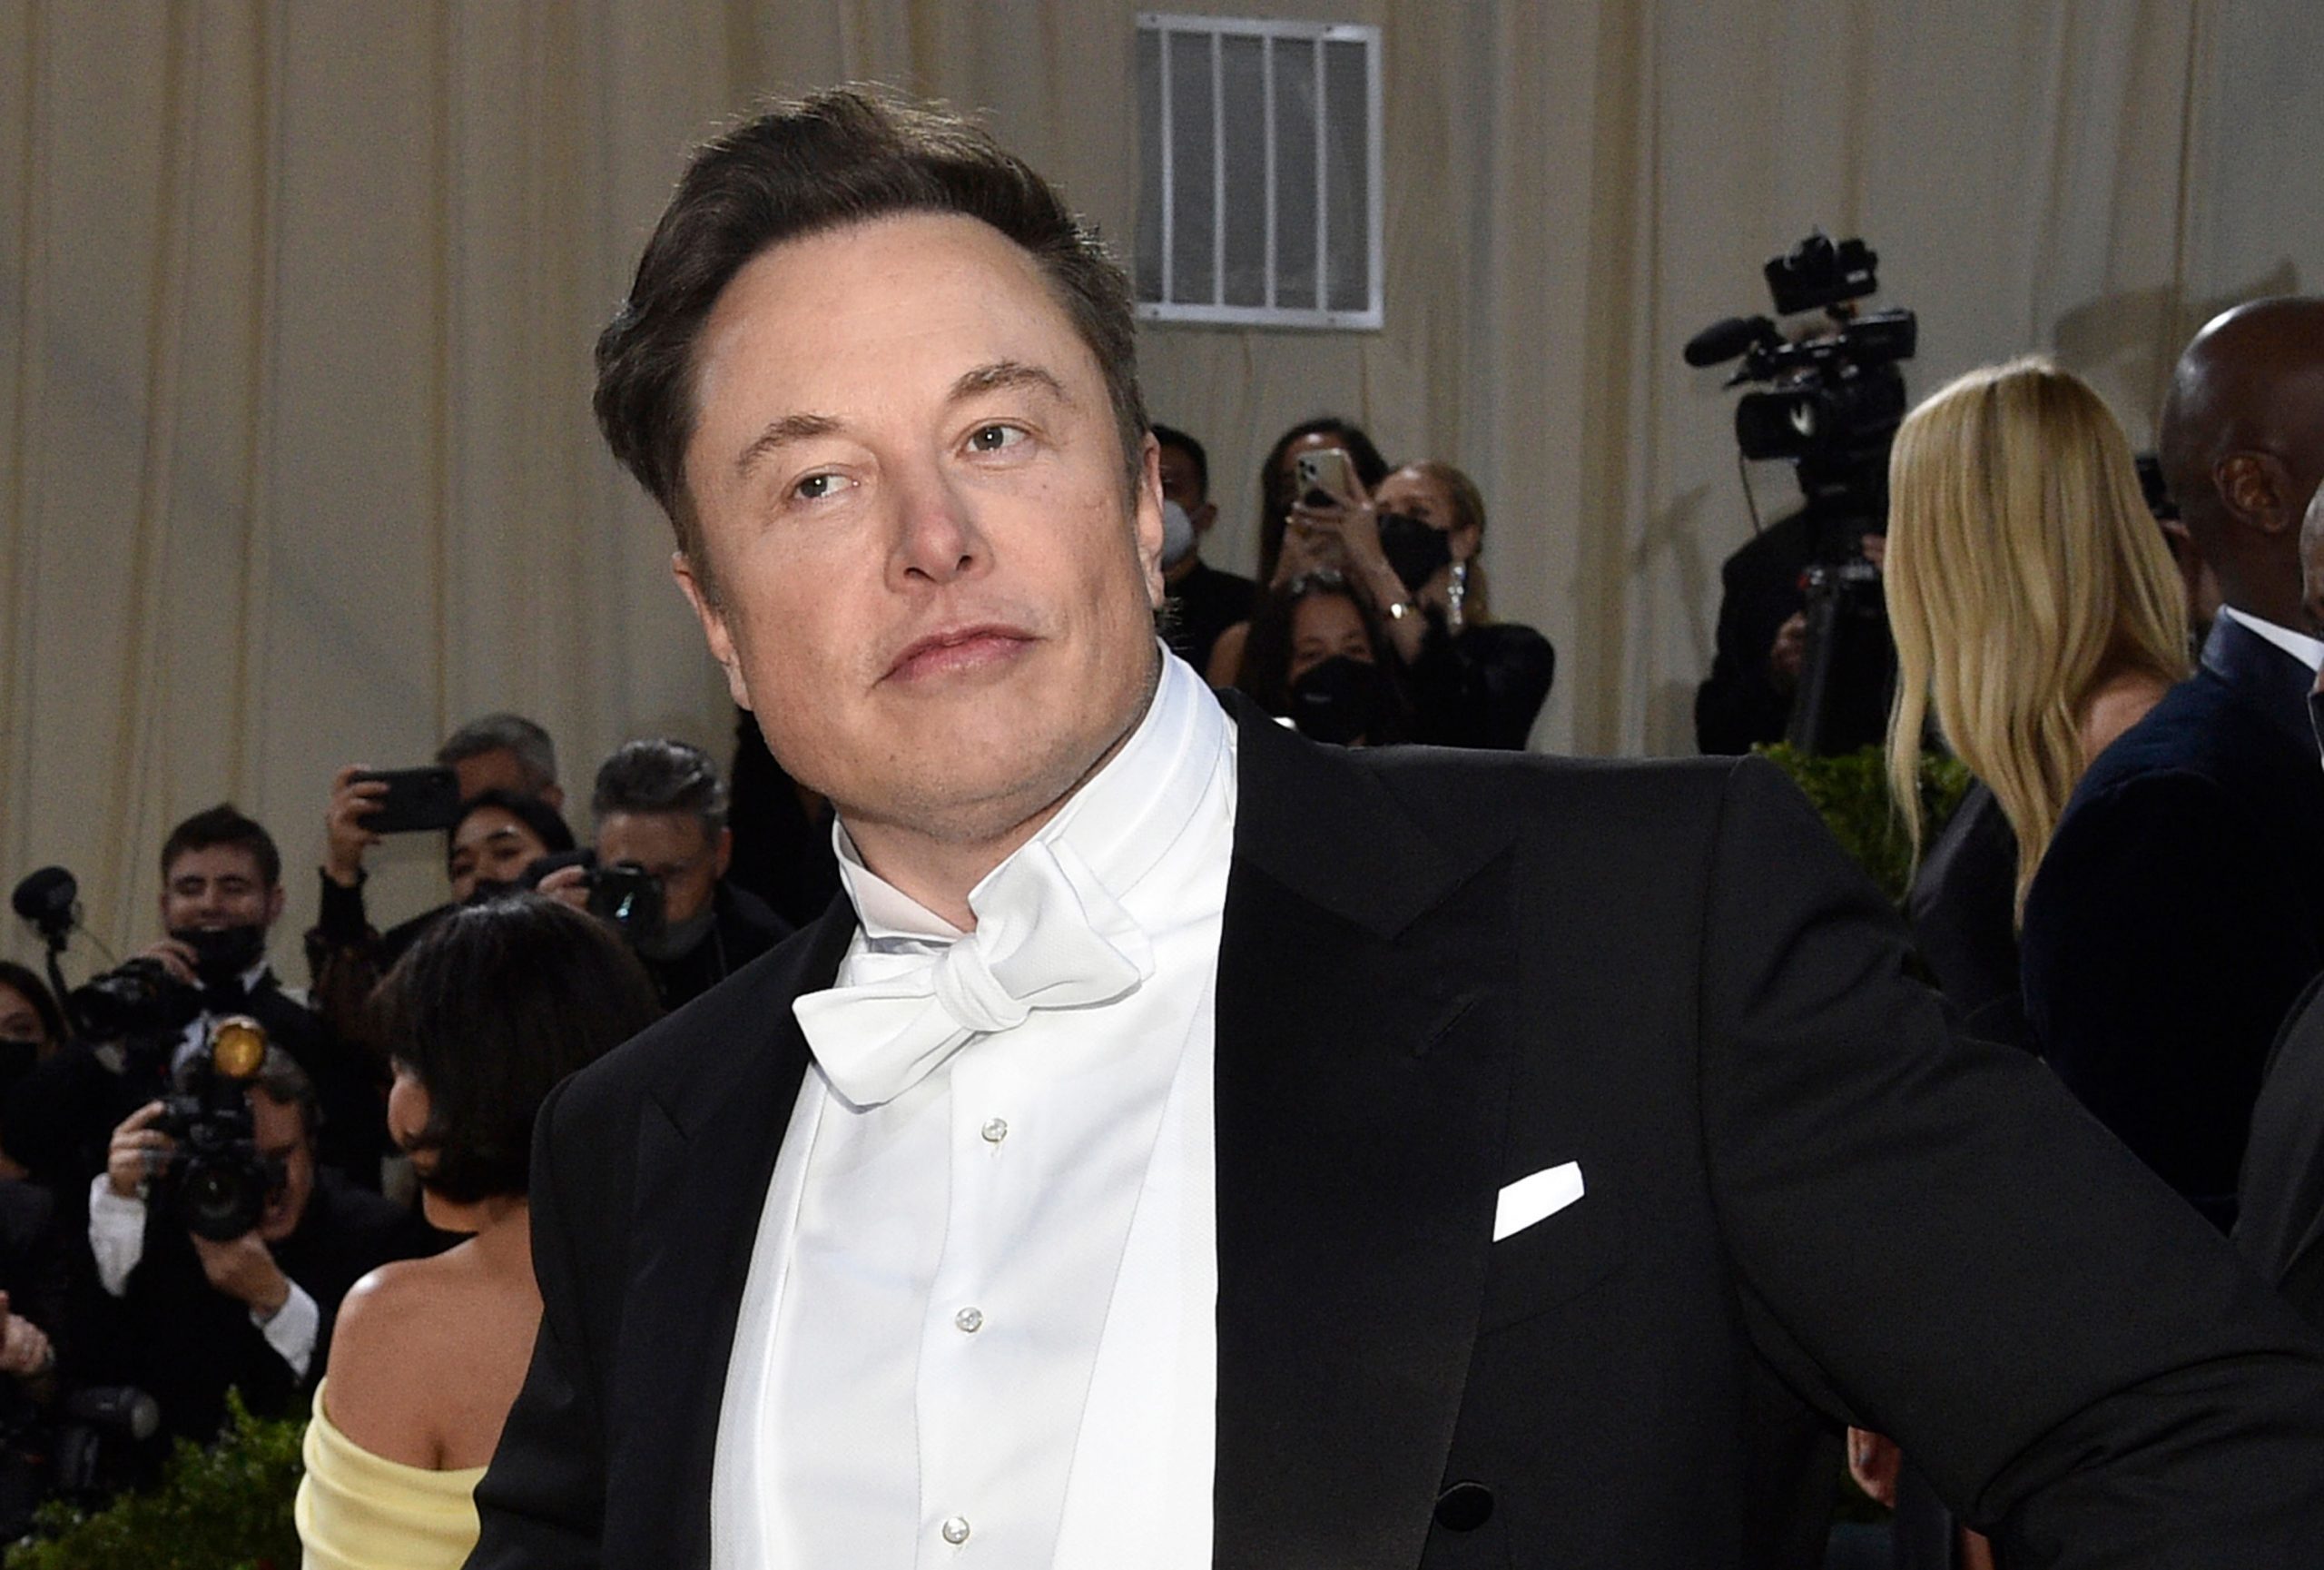 Elon Musk had an affair with Google co-founder Sergey Brin’s wife Nicole Shanahan: Report